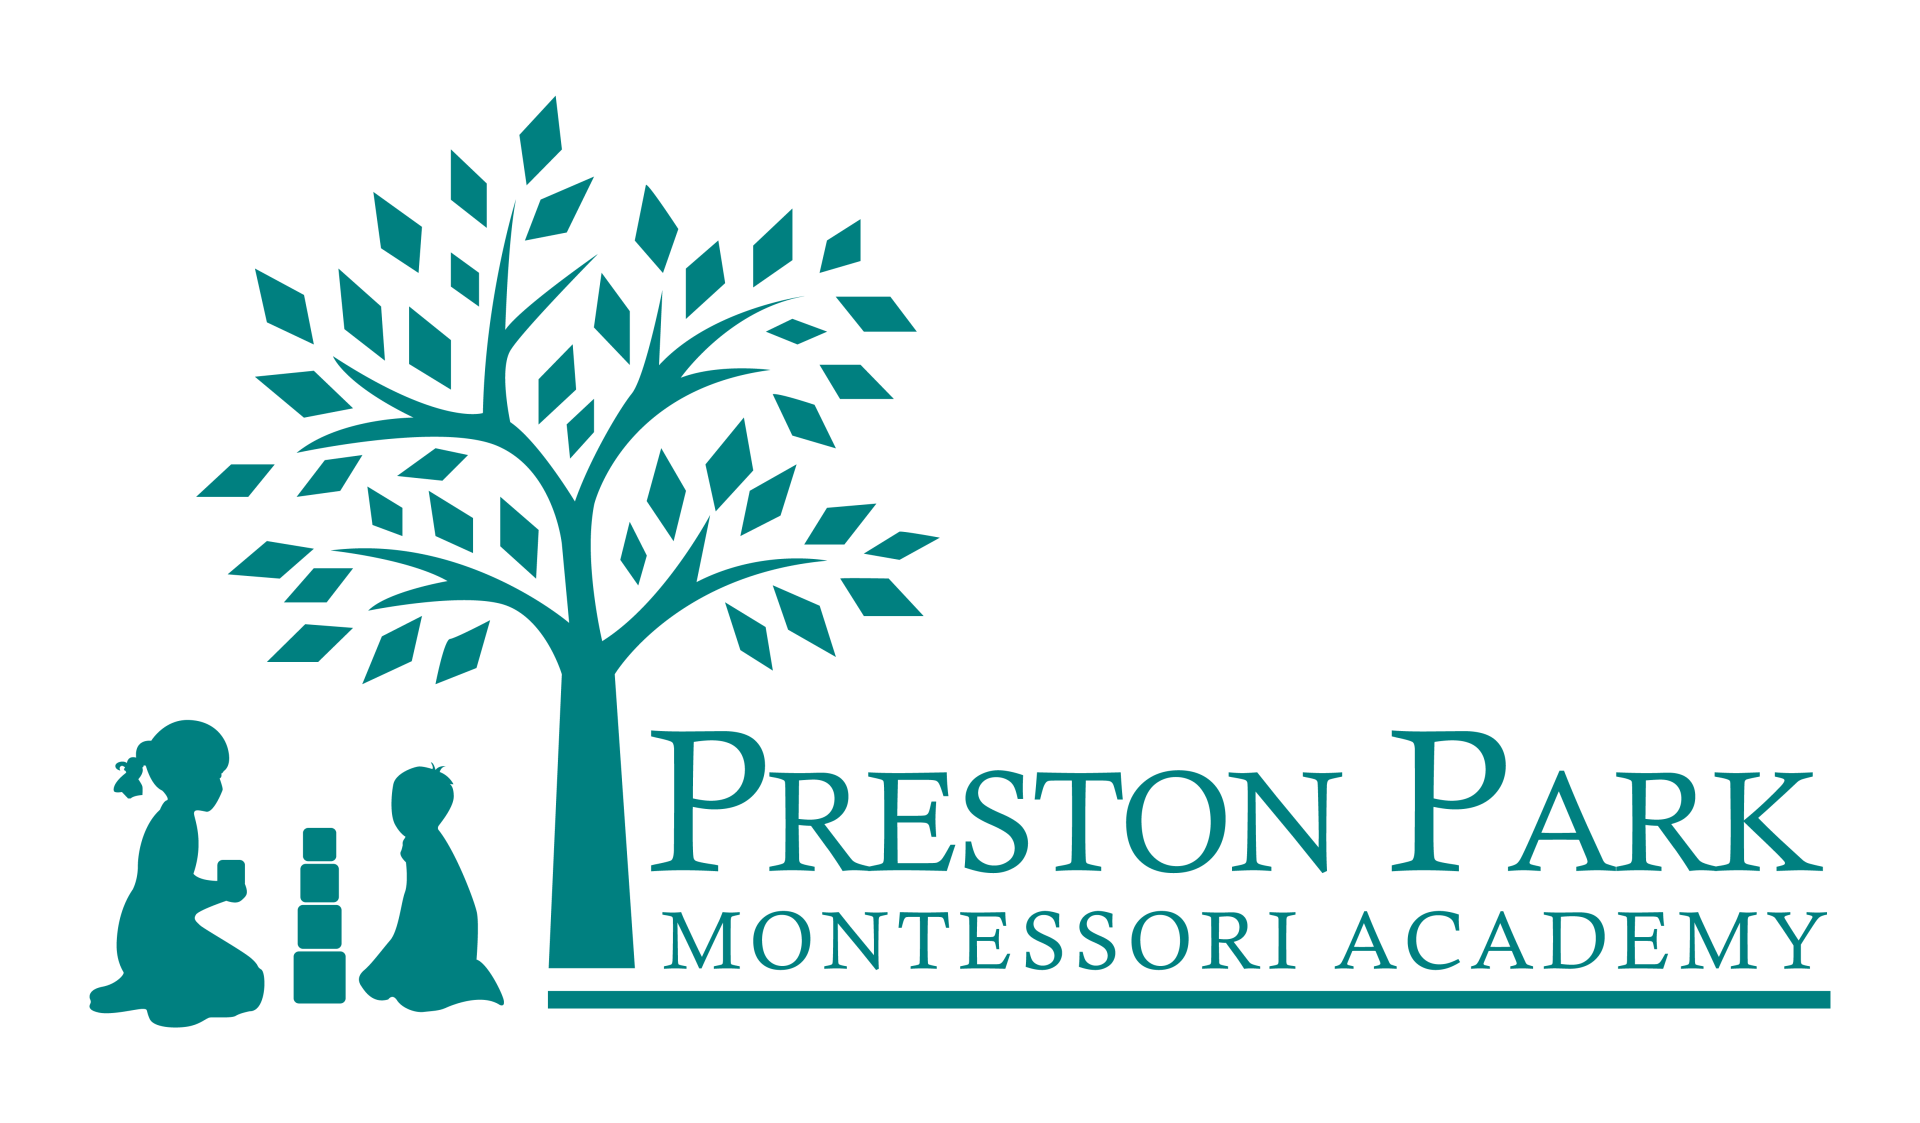 Preston Park Montessori Academy